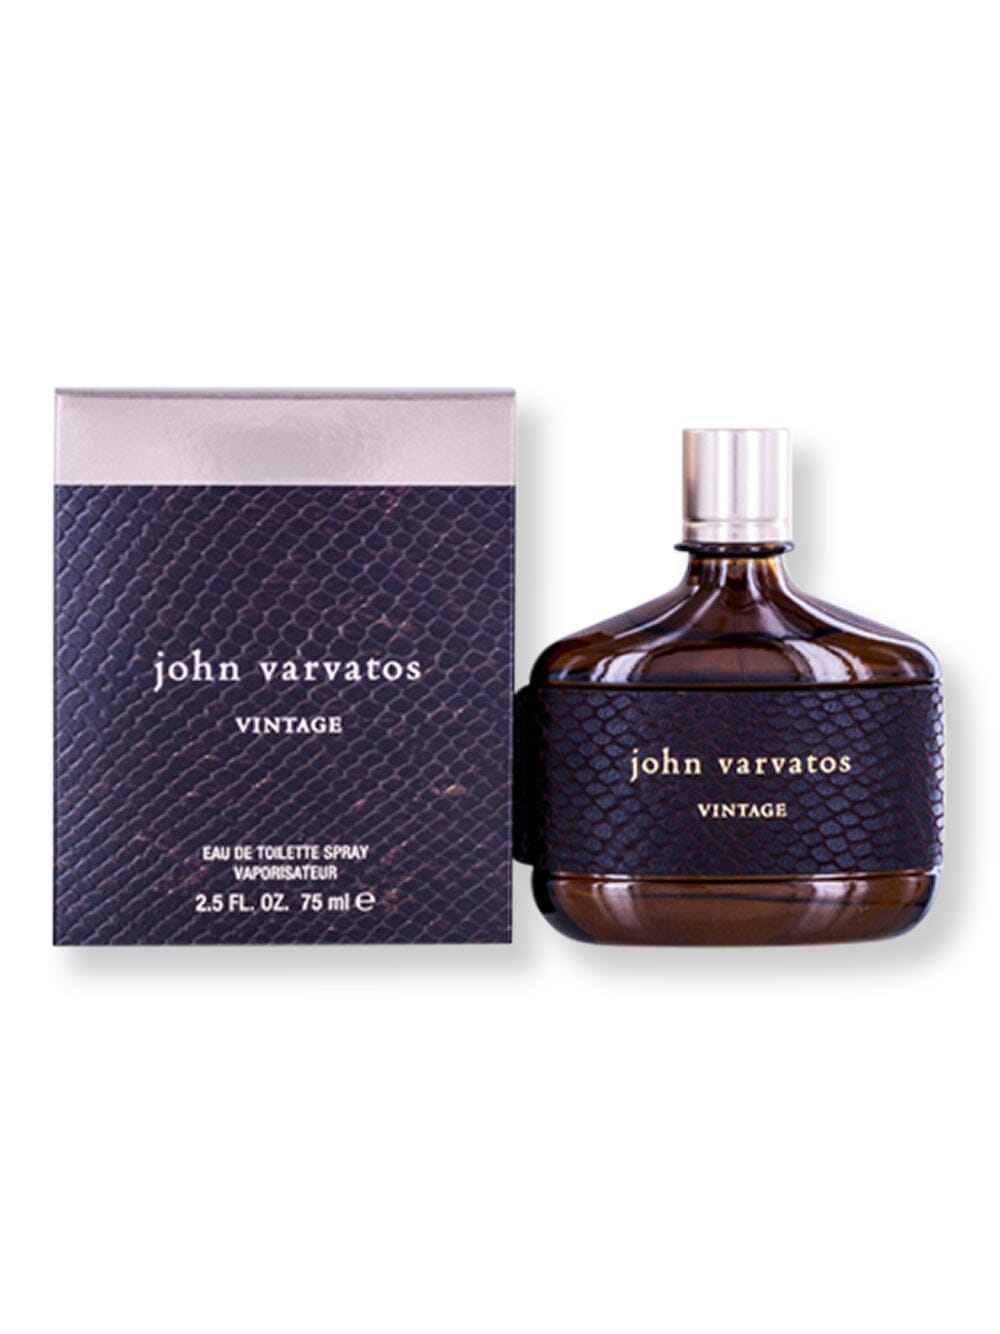 John Varvatos John Varvatos Vintage EDT Spray 2.5 oz Perfume 